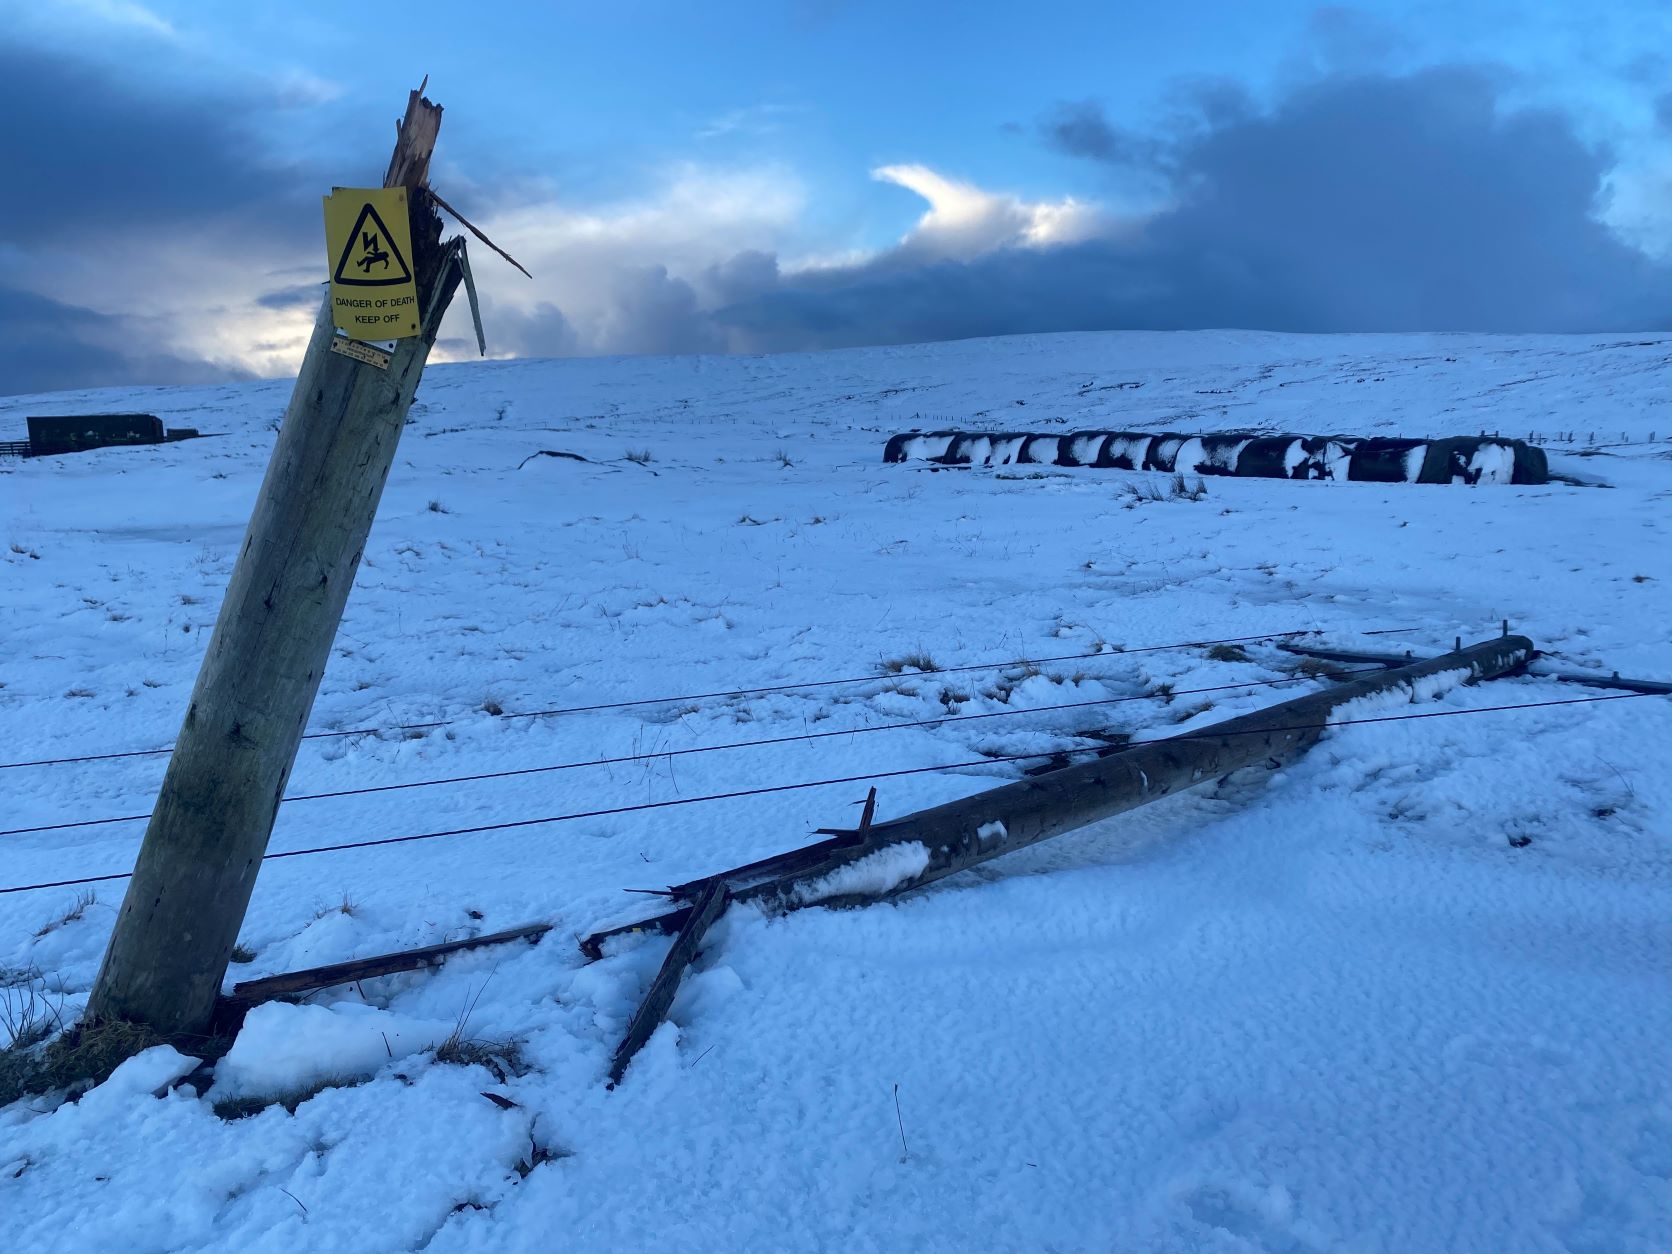 Broken poles in snow